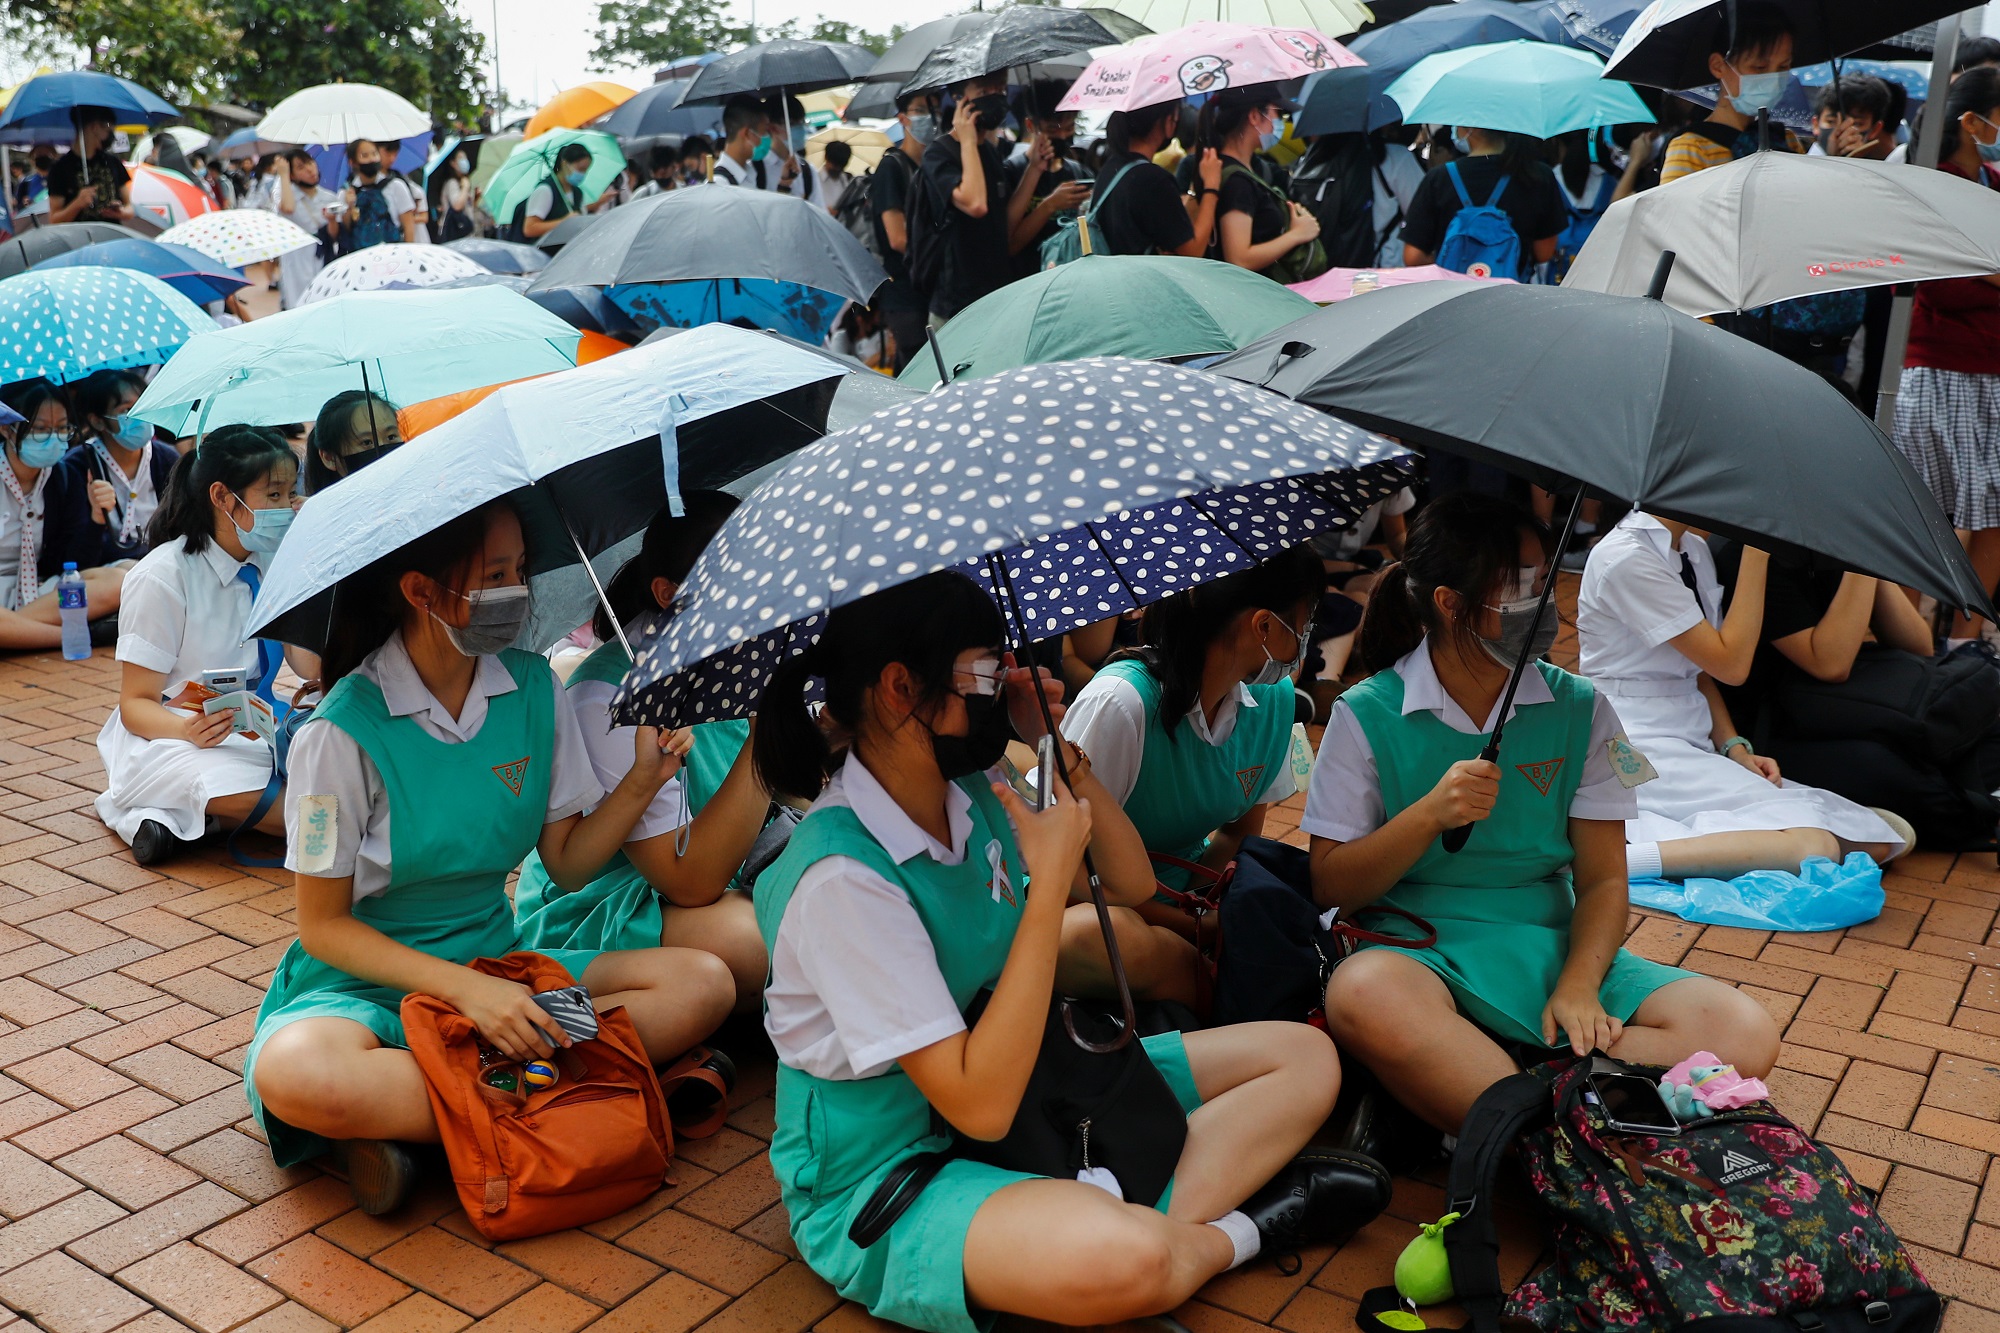 Students hold umbrellas as they protest at Edinburgh Place in Hong Kong, China September 2, 2019. REUTERS/Kai Pfaffenbach